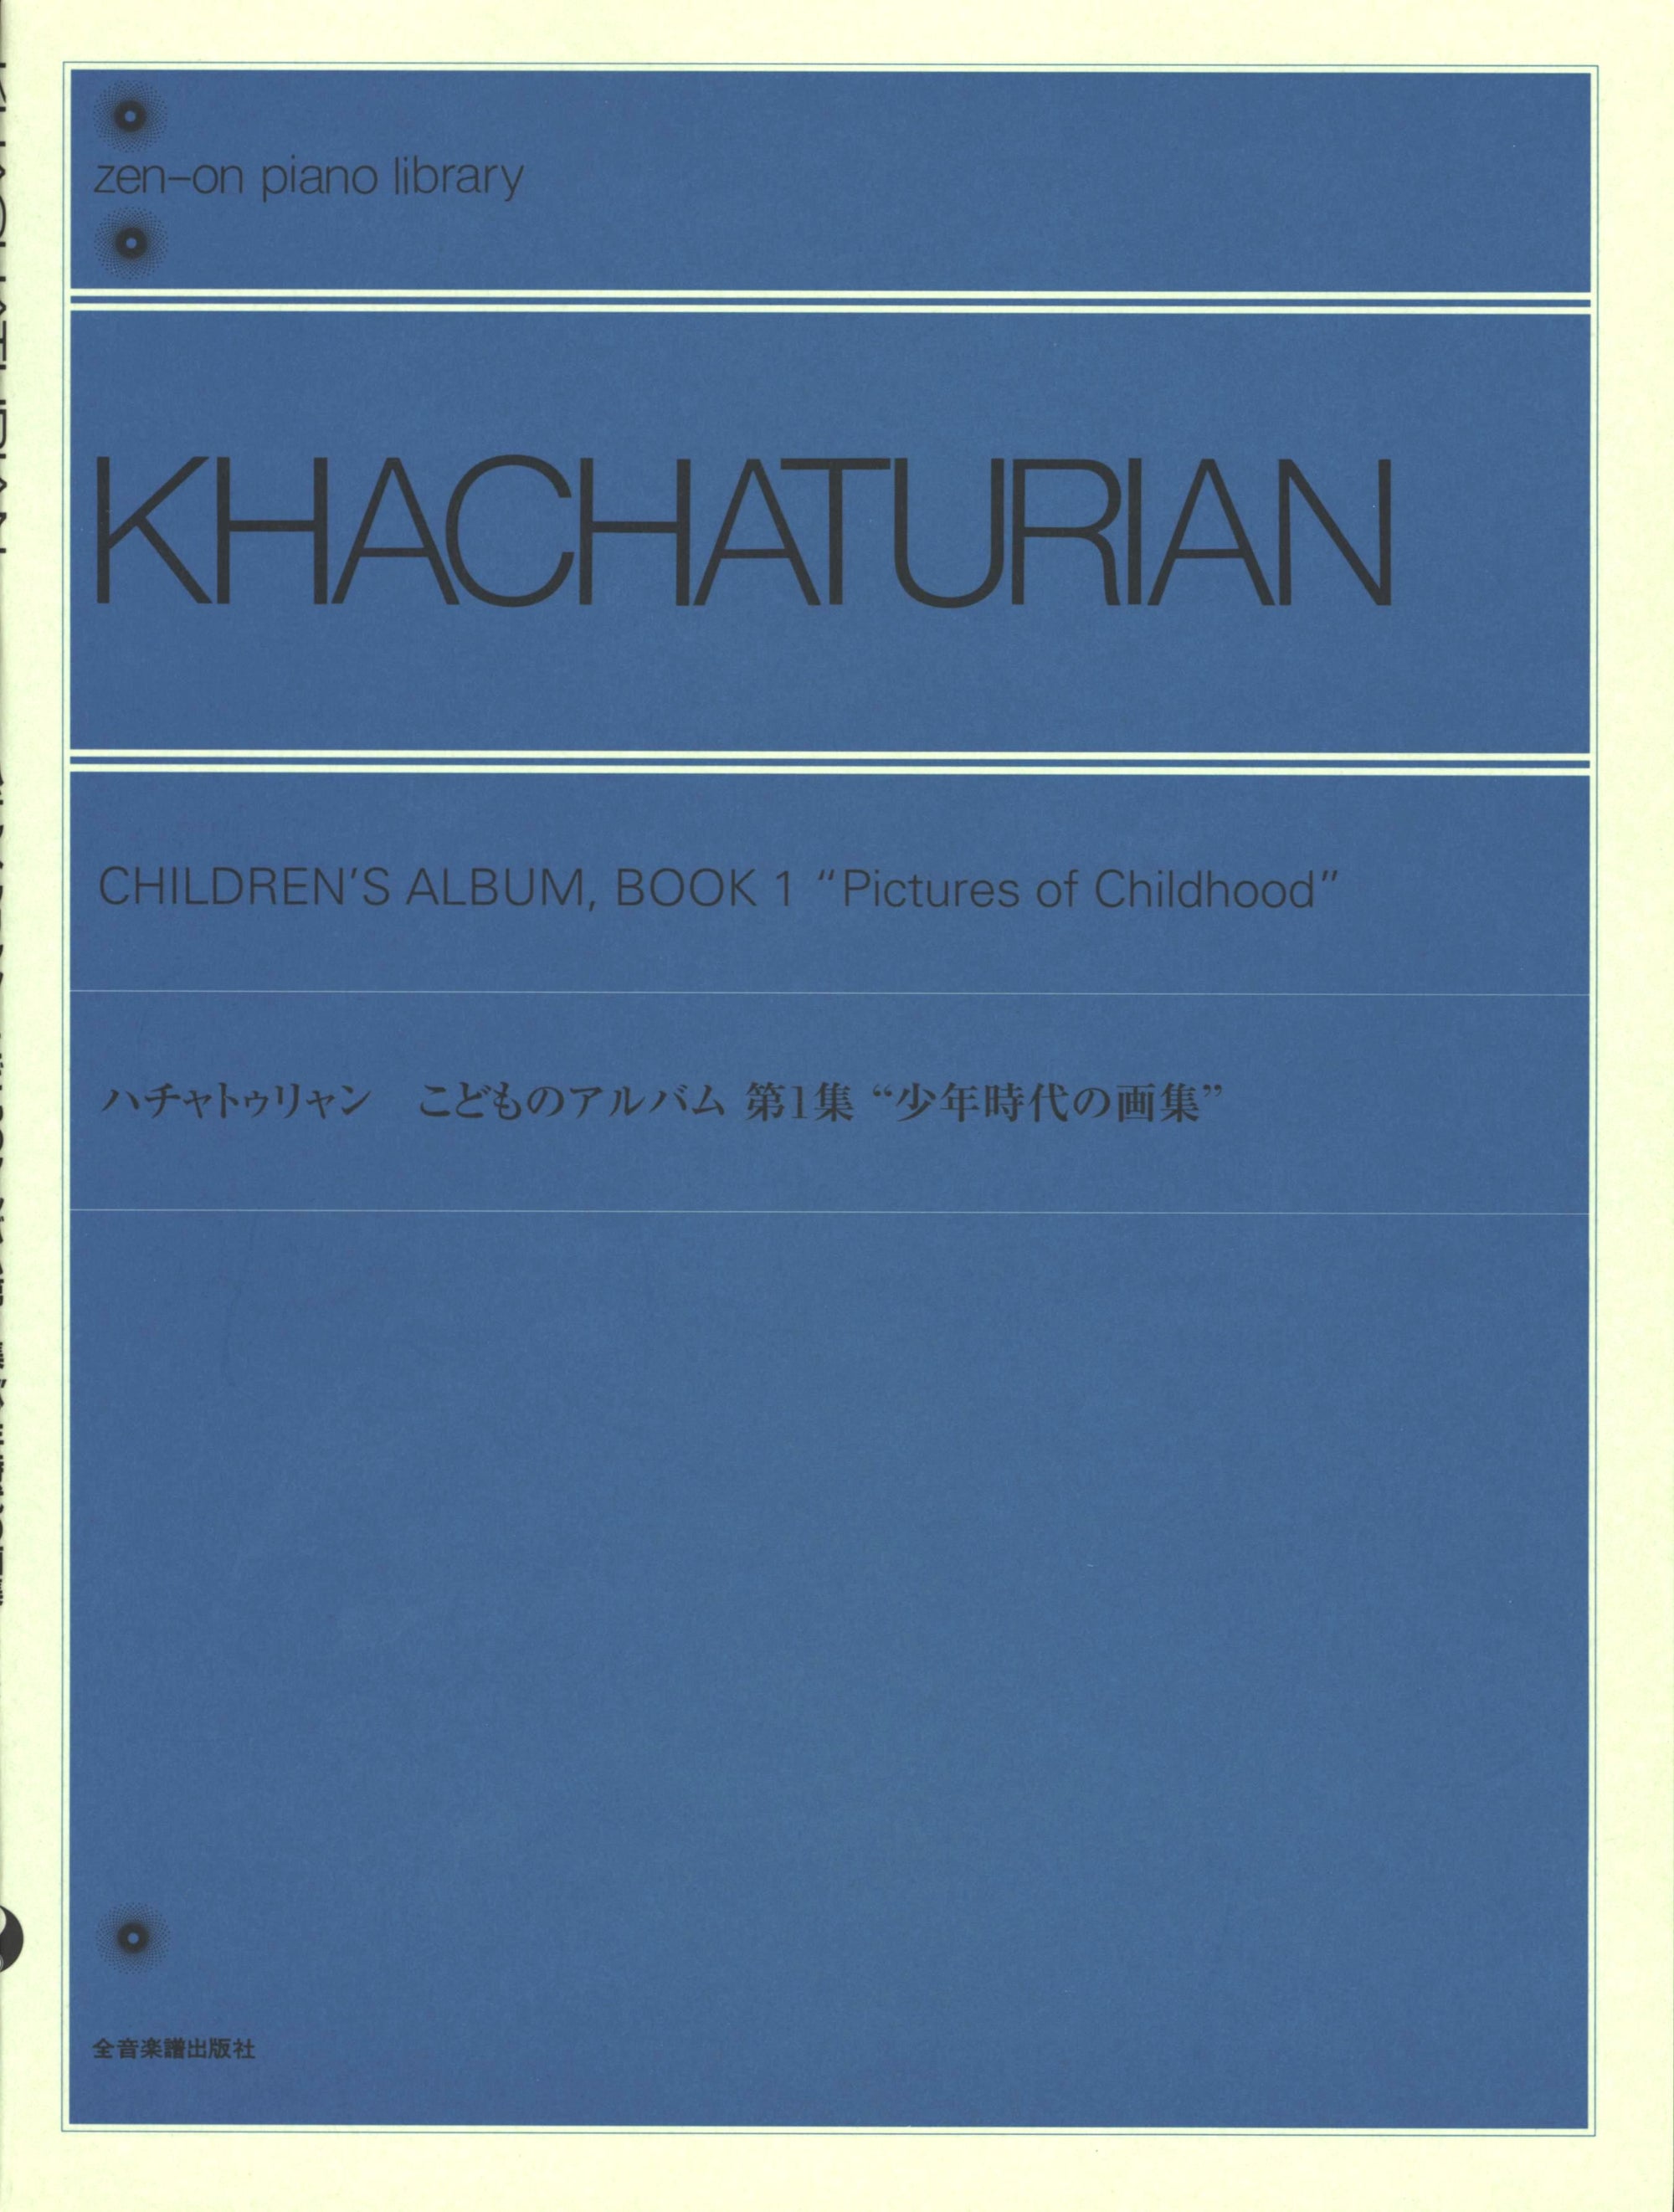 Khachaturian: Children's Album - Book 1